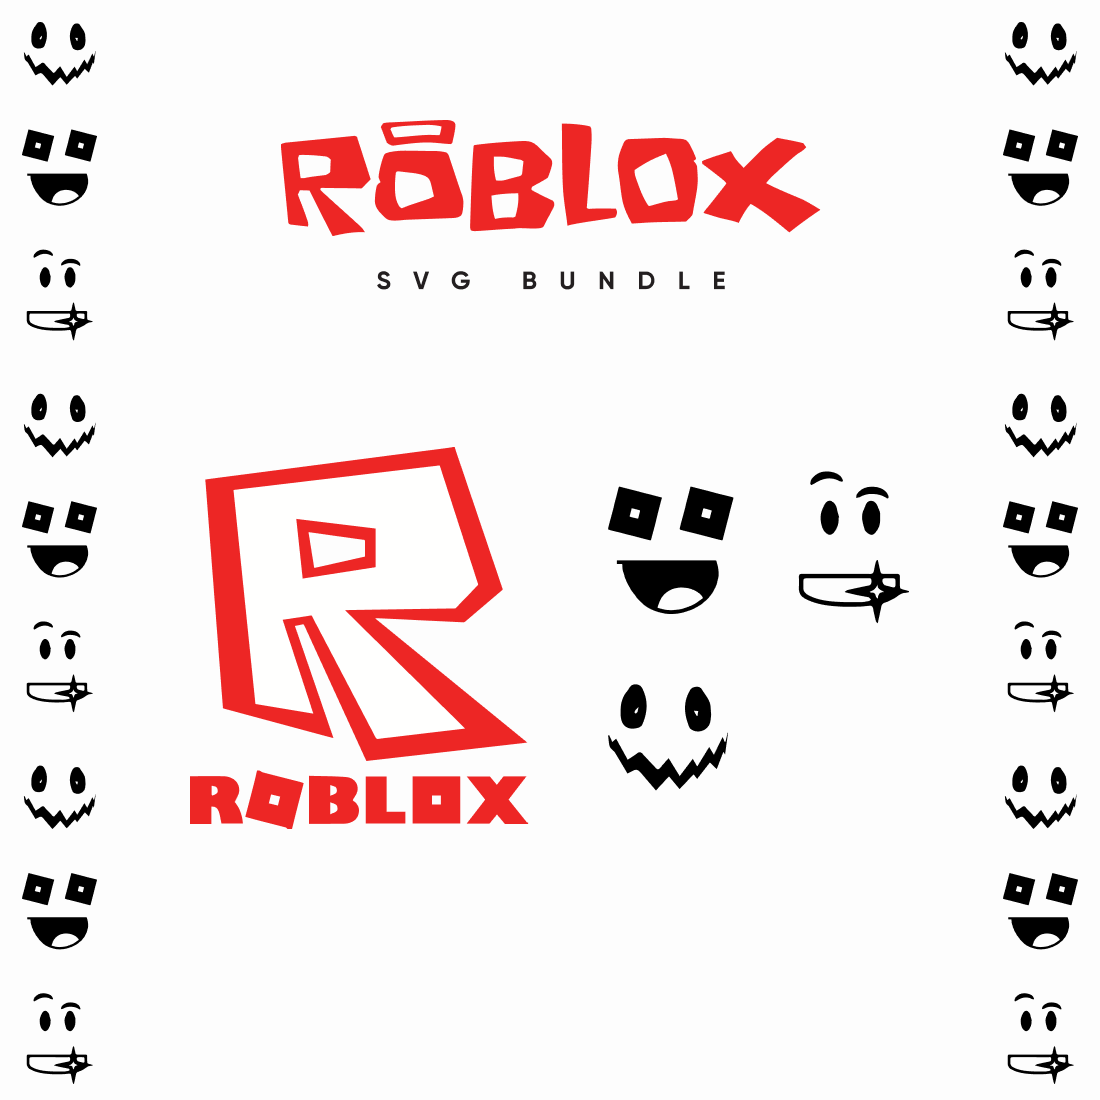 Roblox SVG Files Bundle previews image.